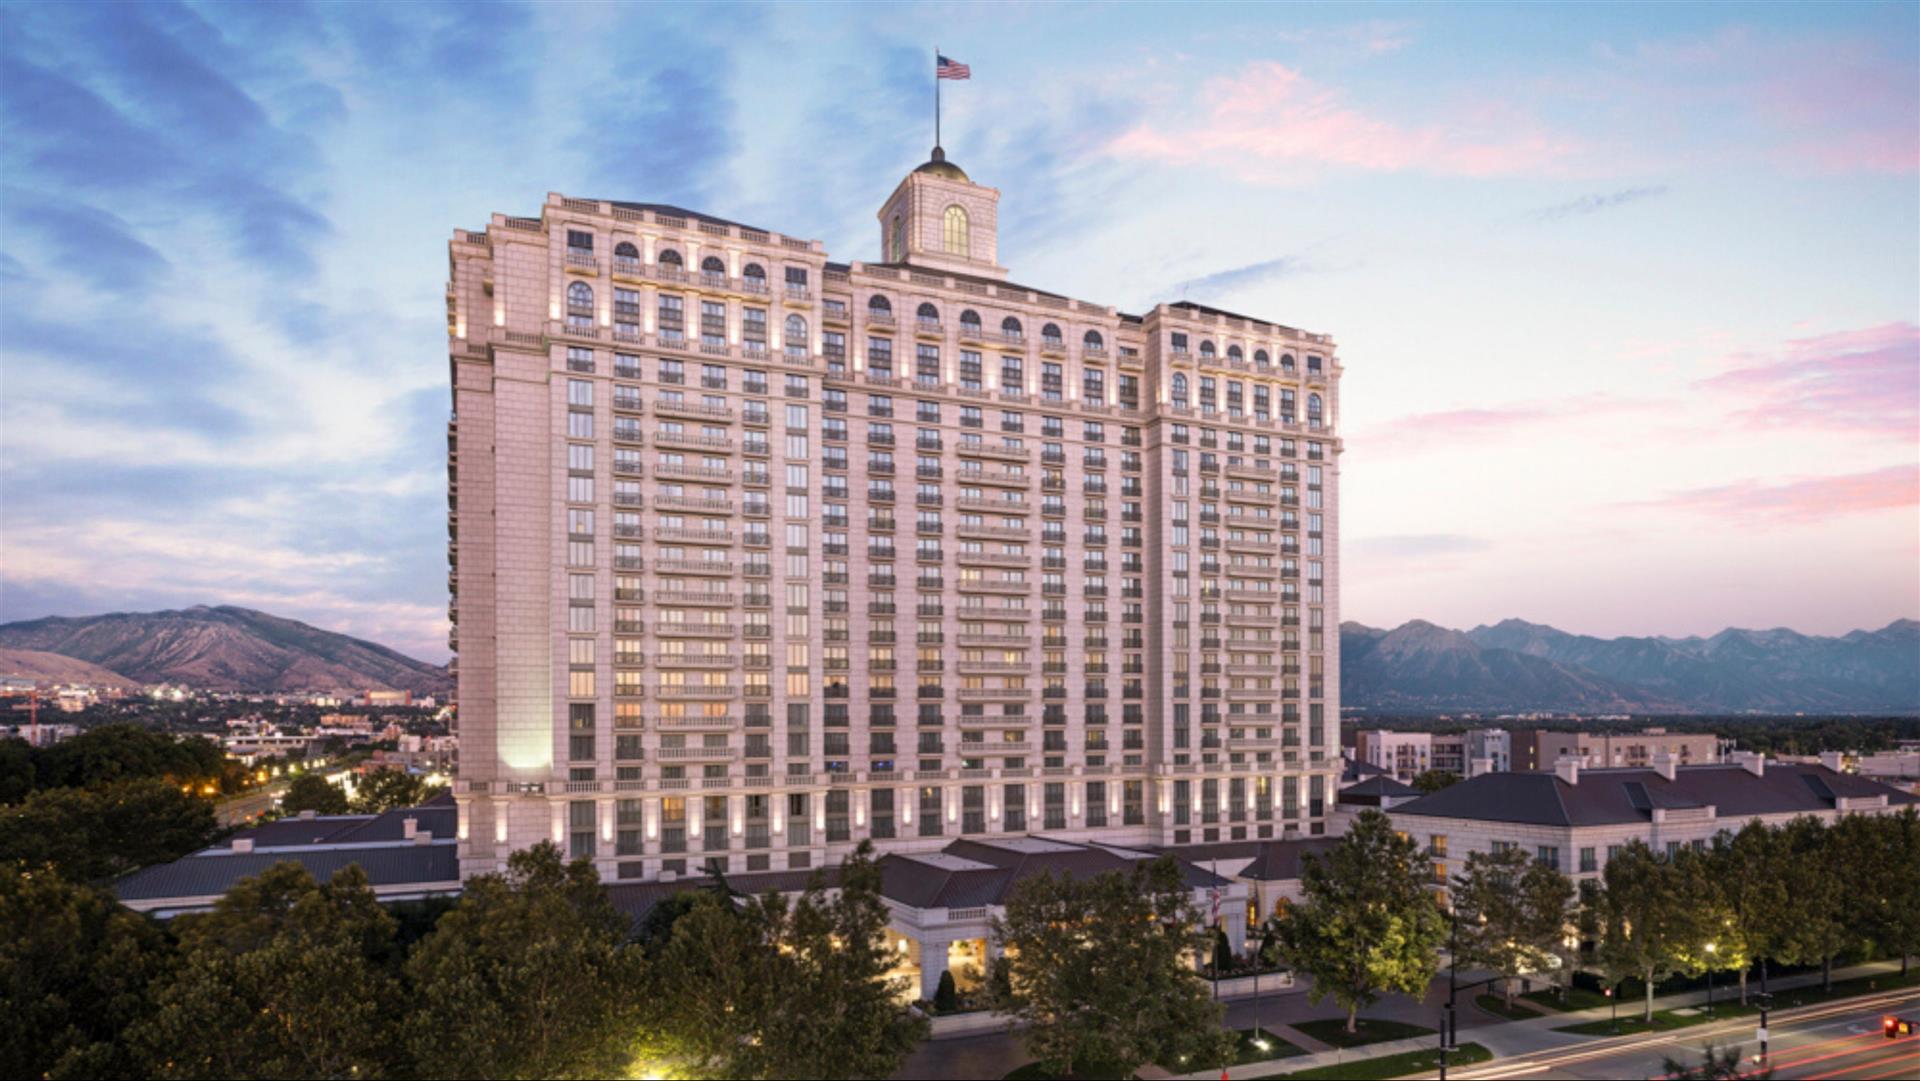 The Grand America Hotel in Salt Lake City, UT